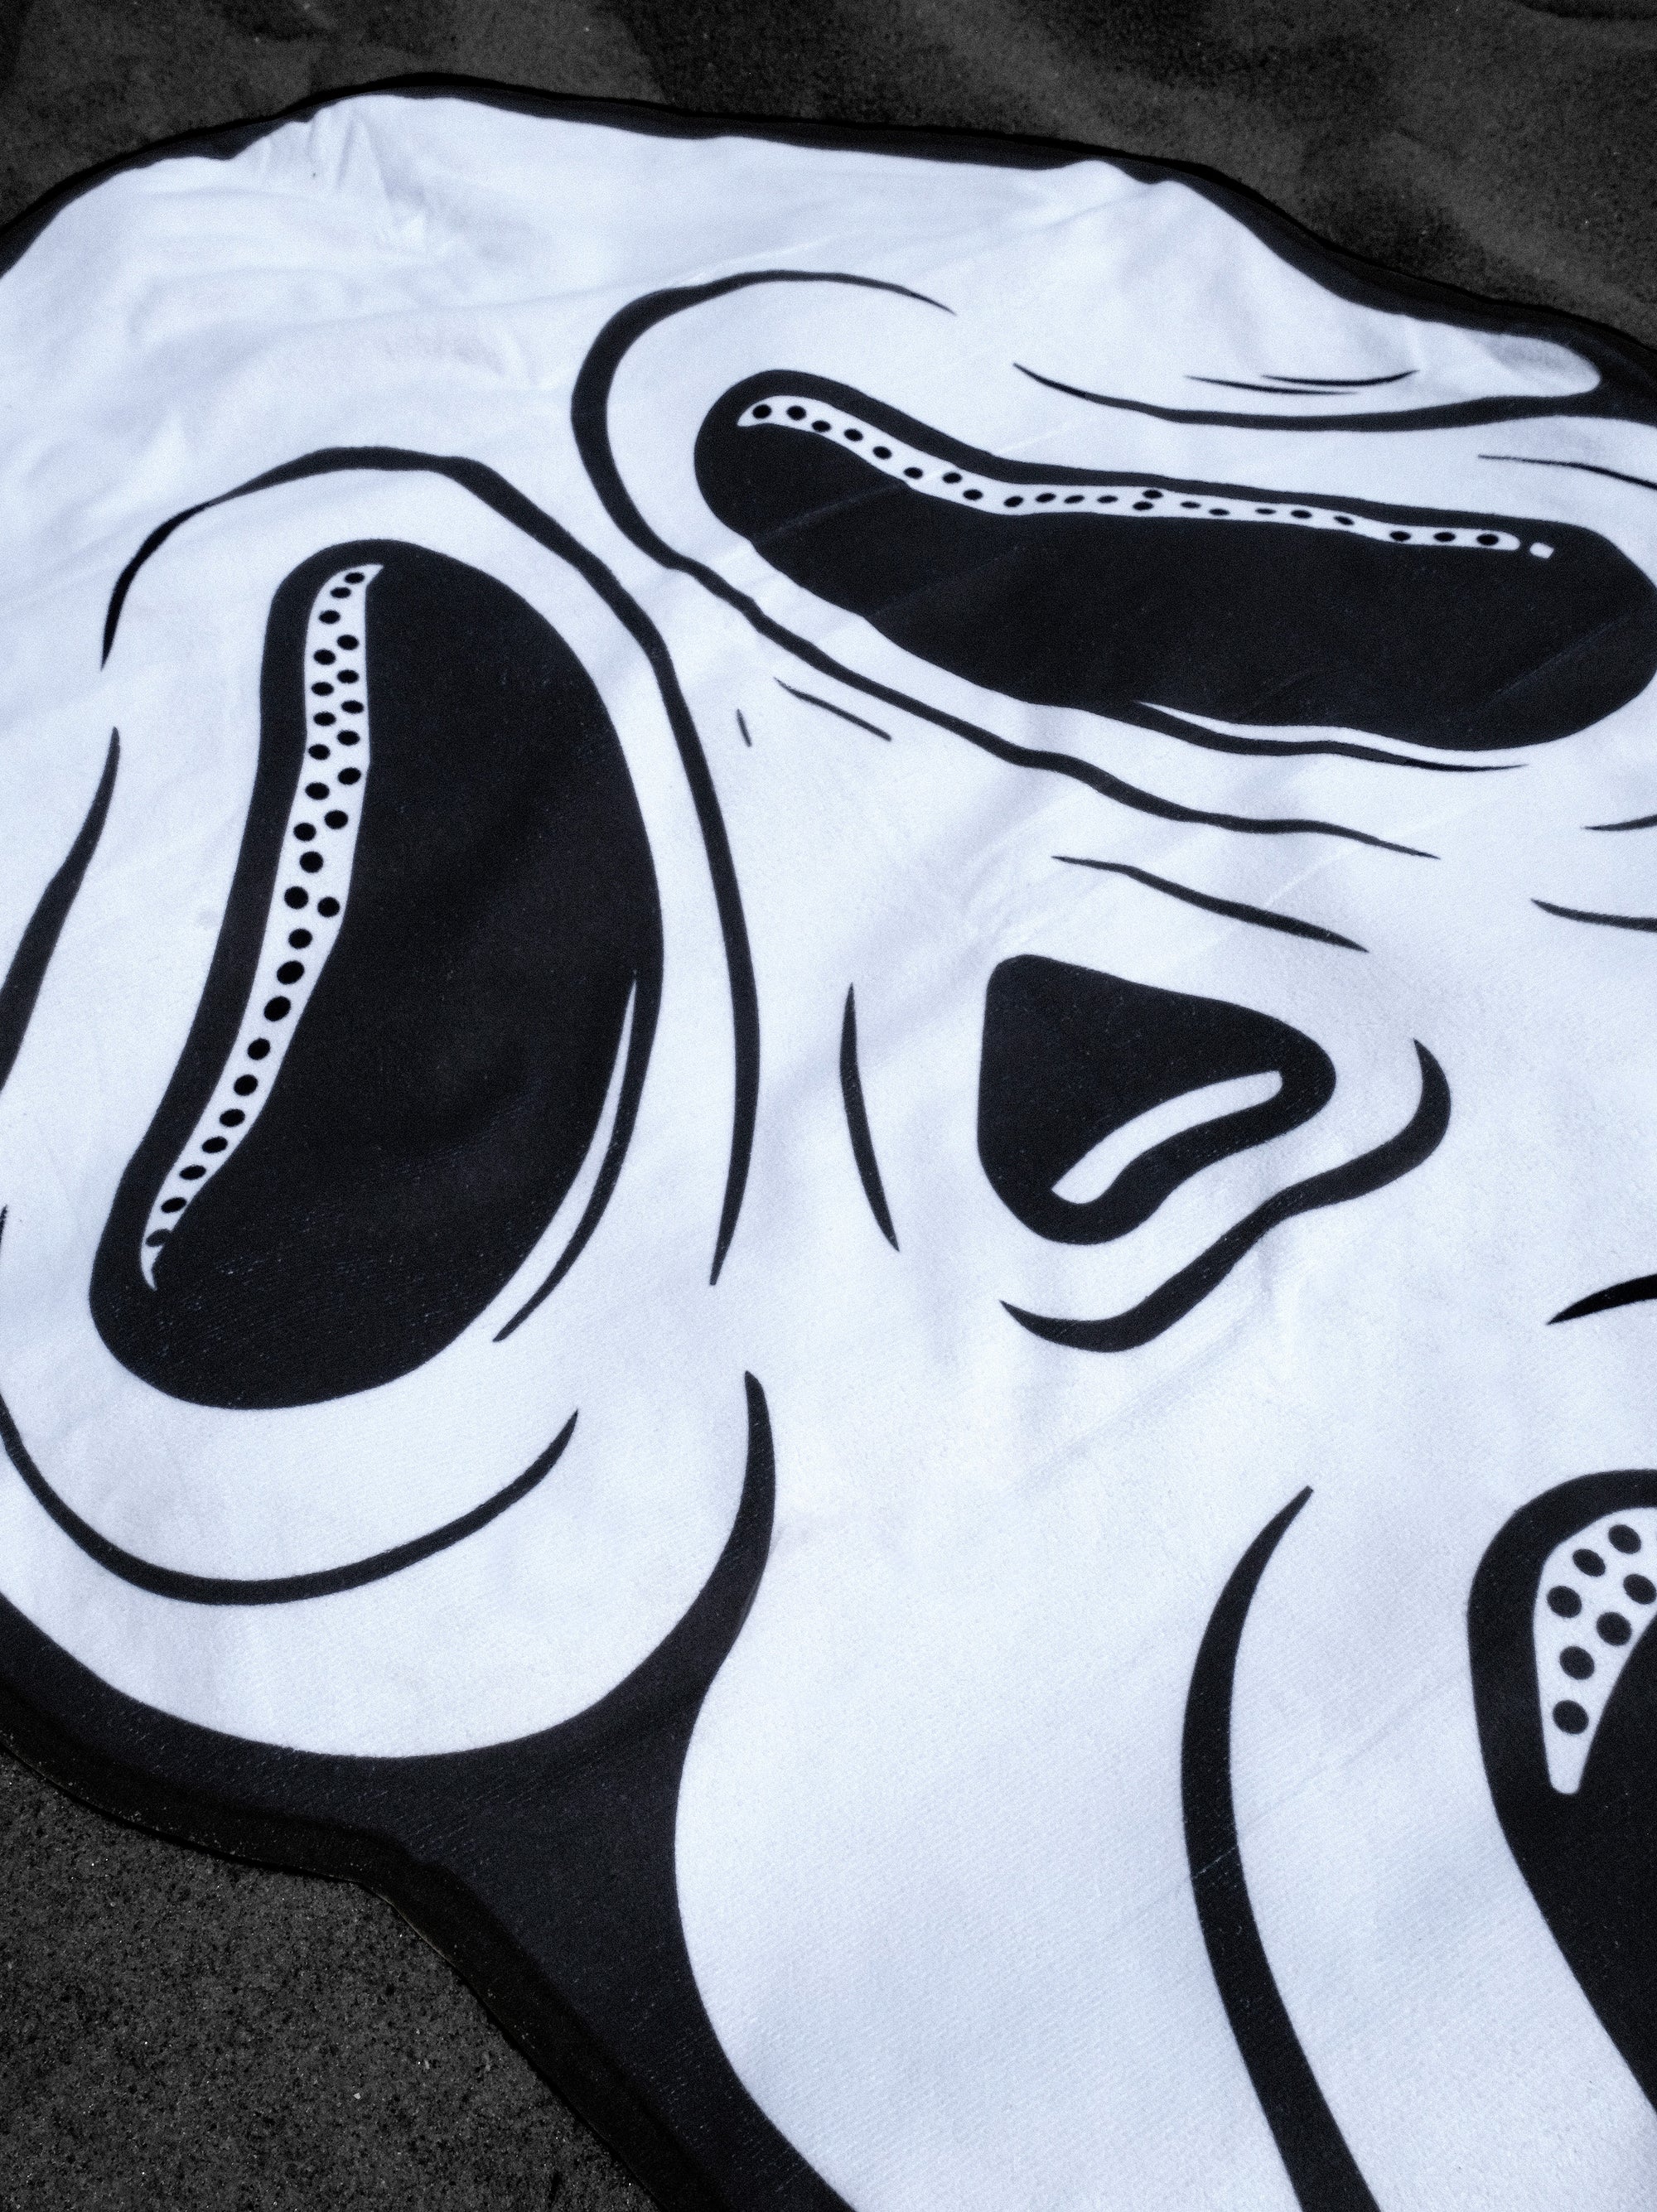 Scream Ghost Face Shaped Beach Towel